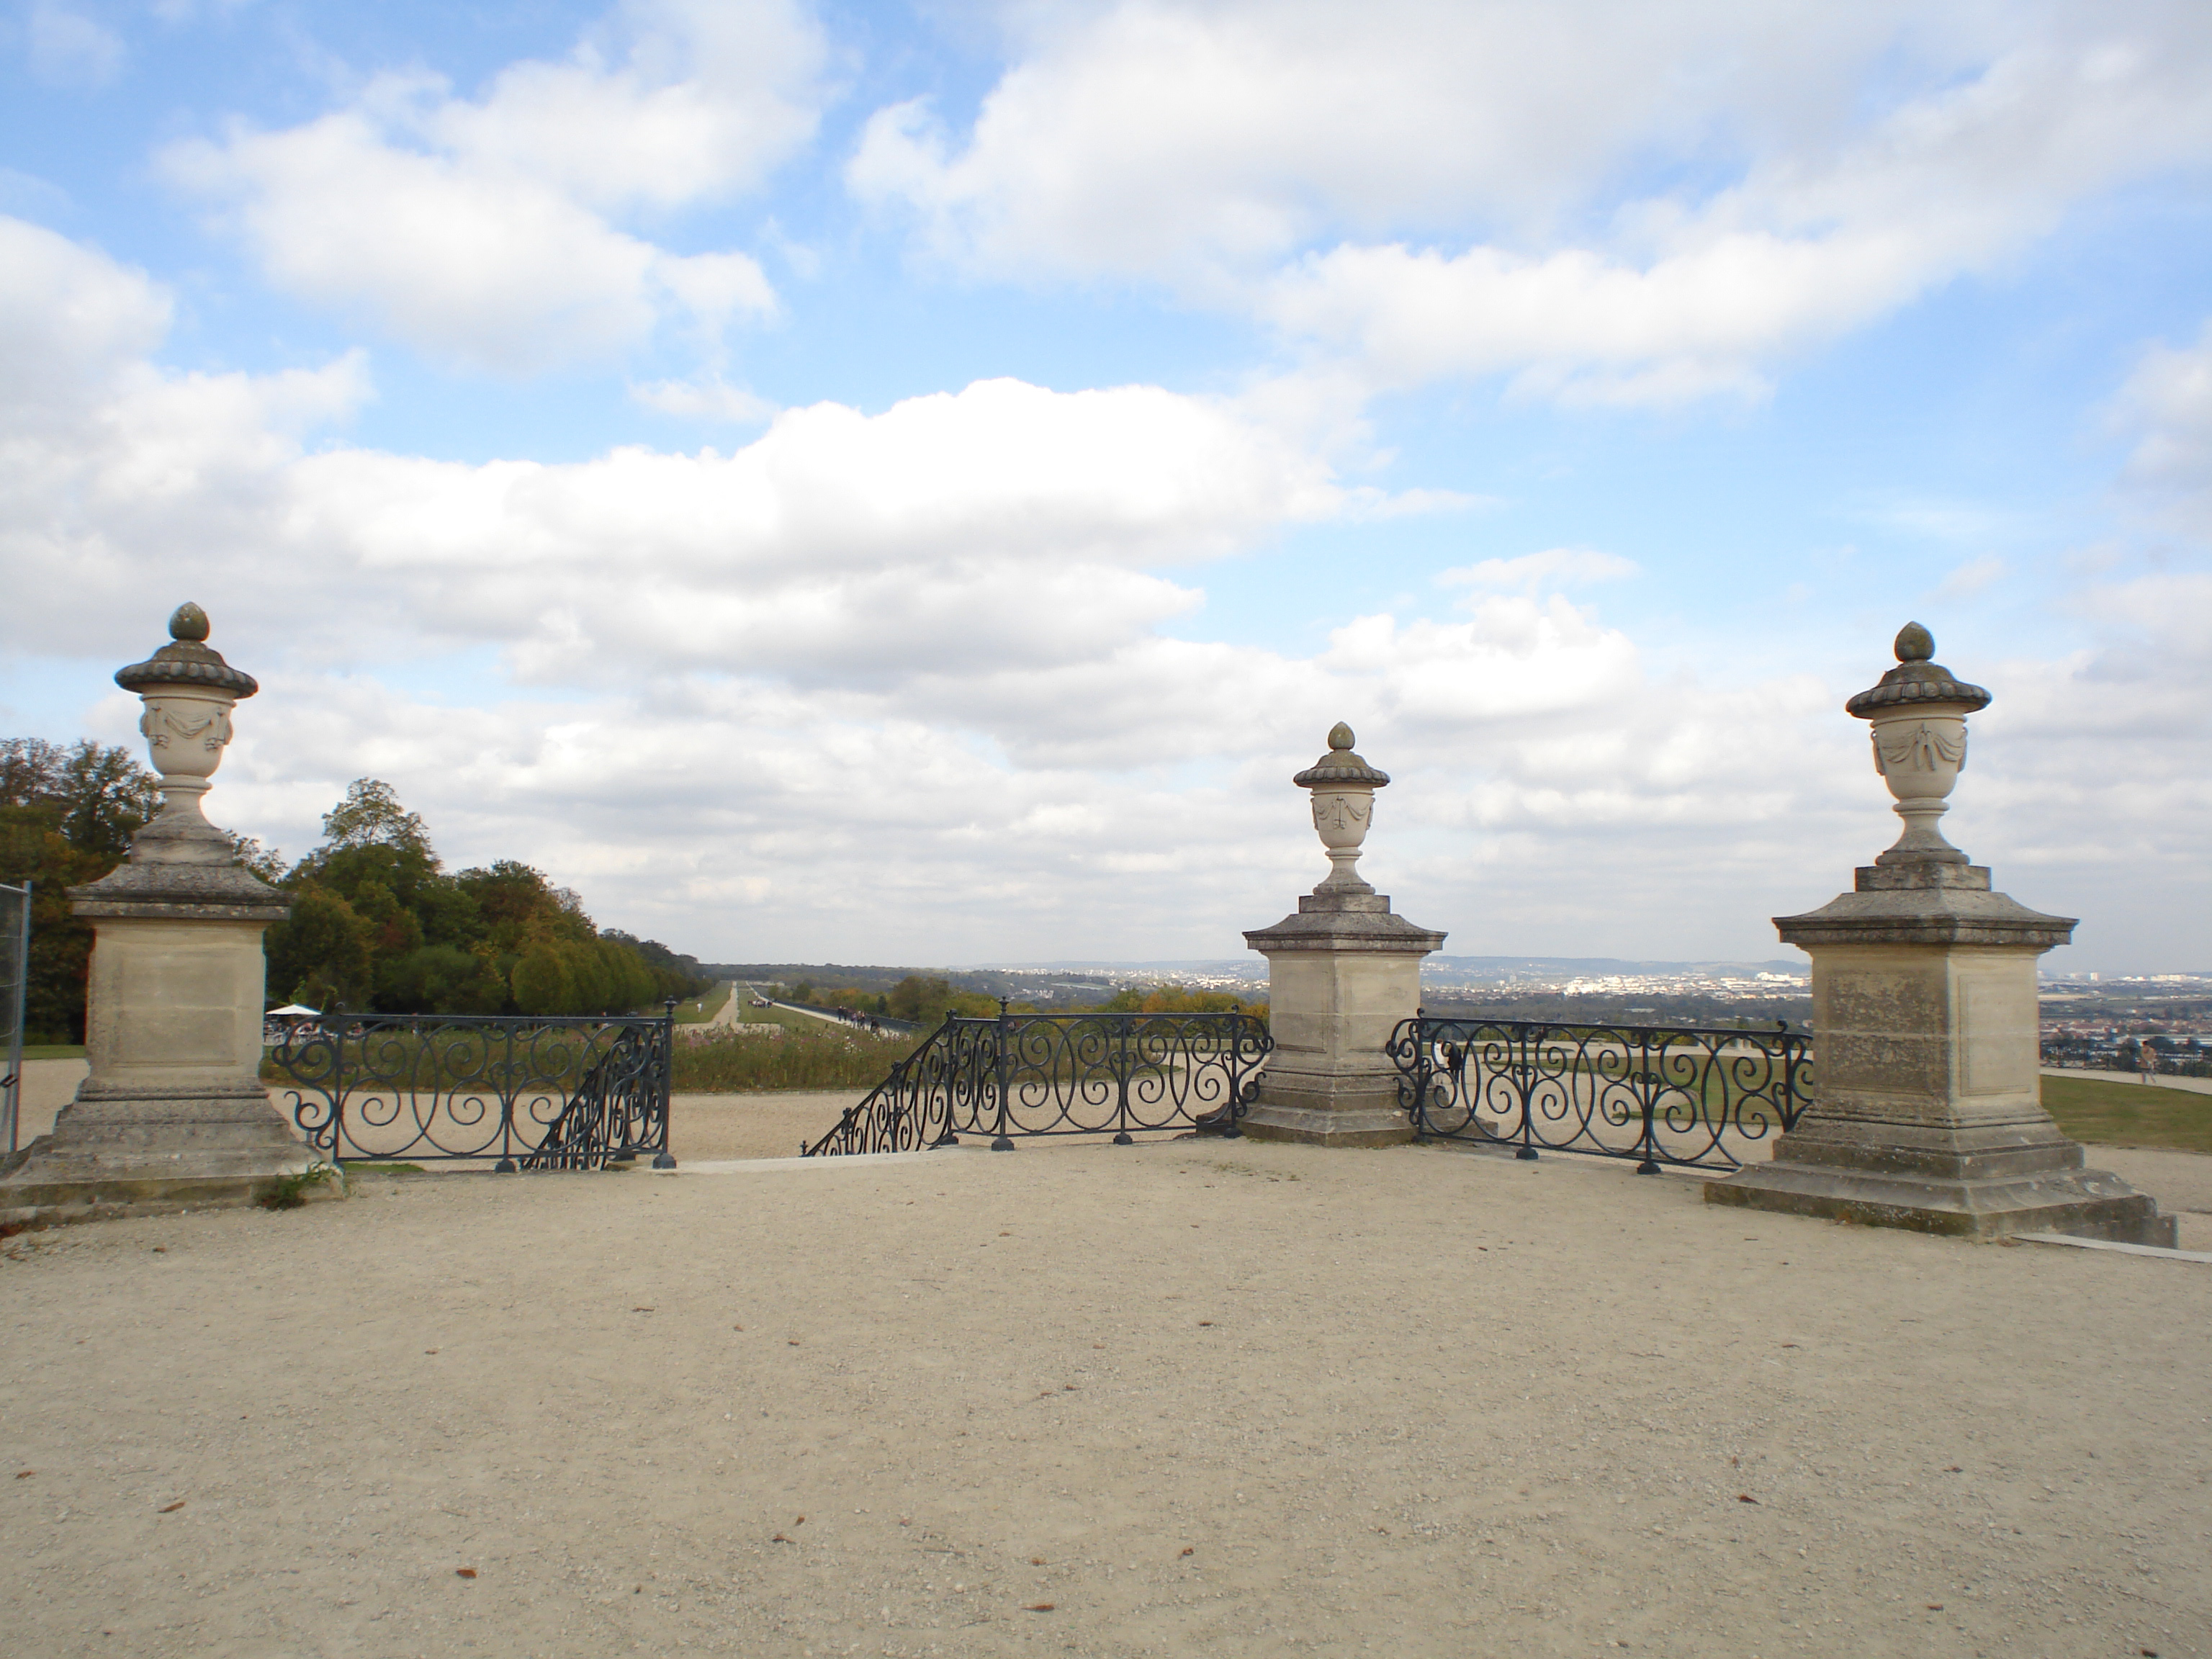 La Grande Terrasse du domaine national de Saint-Germain-en-Laye